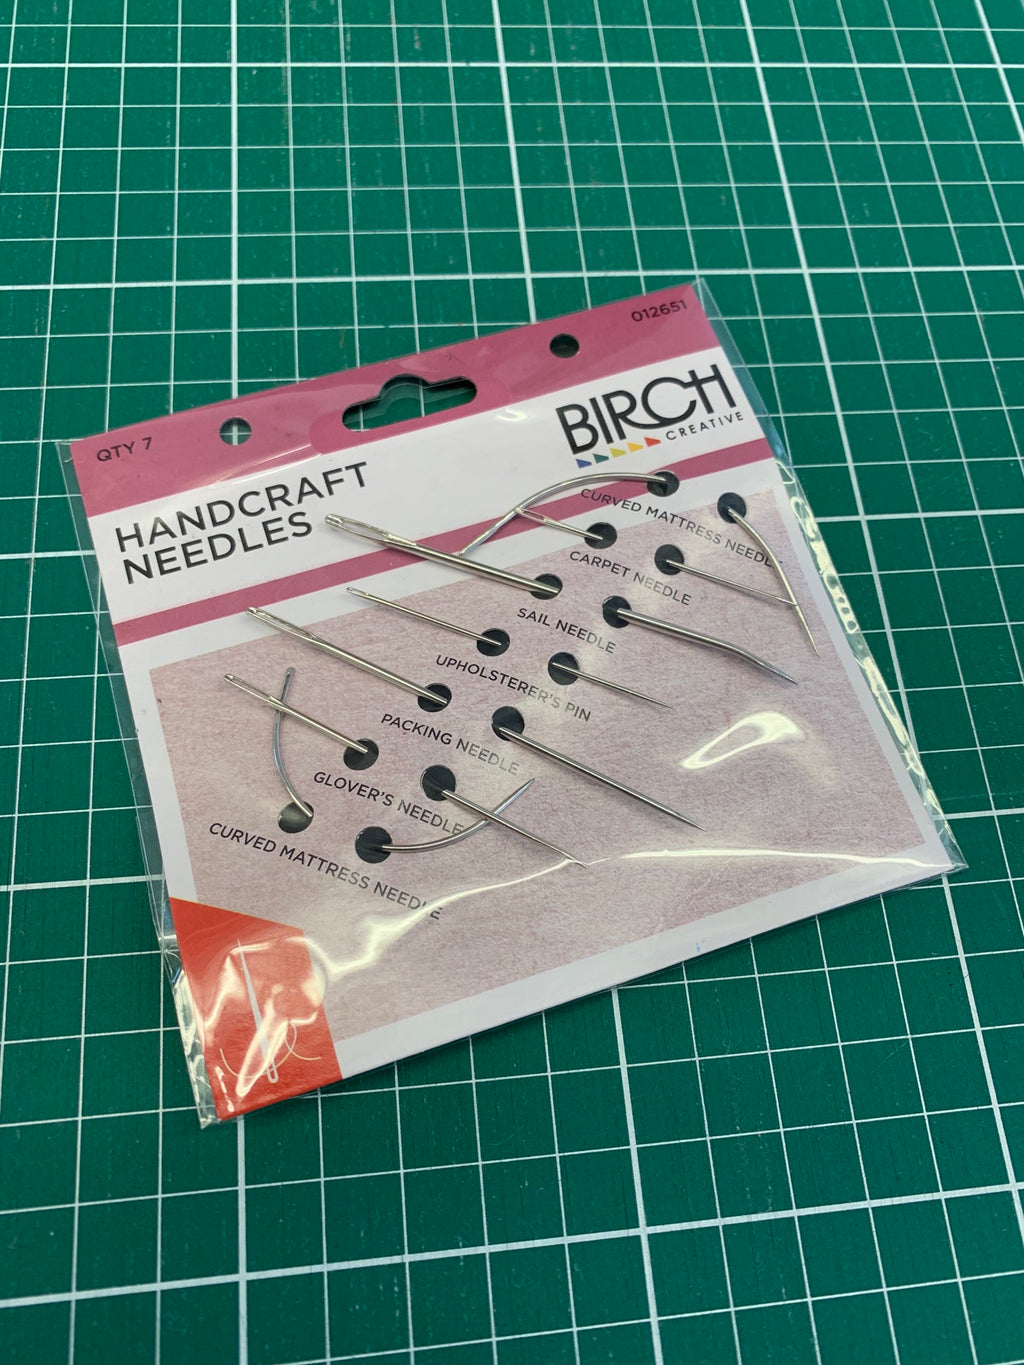 Birch handcraft needles